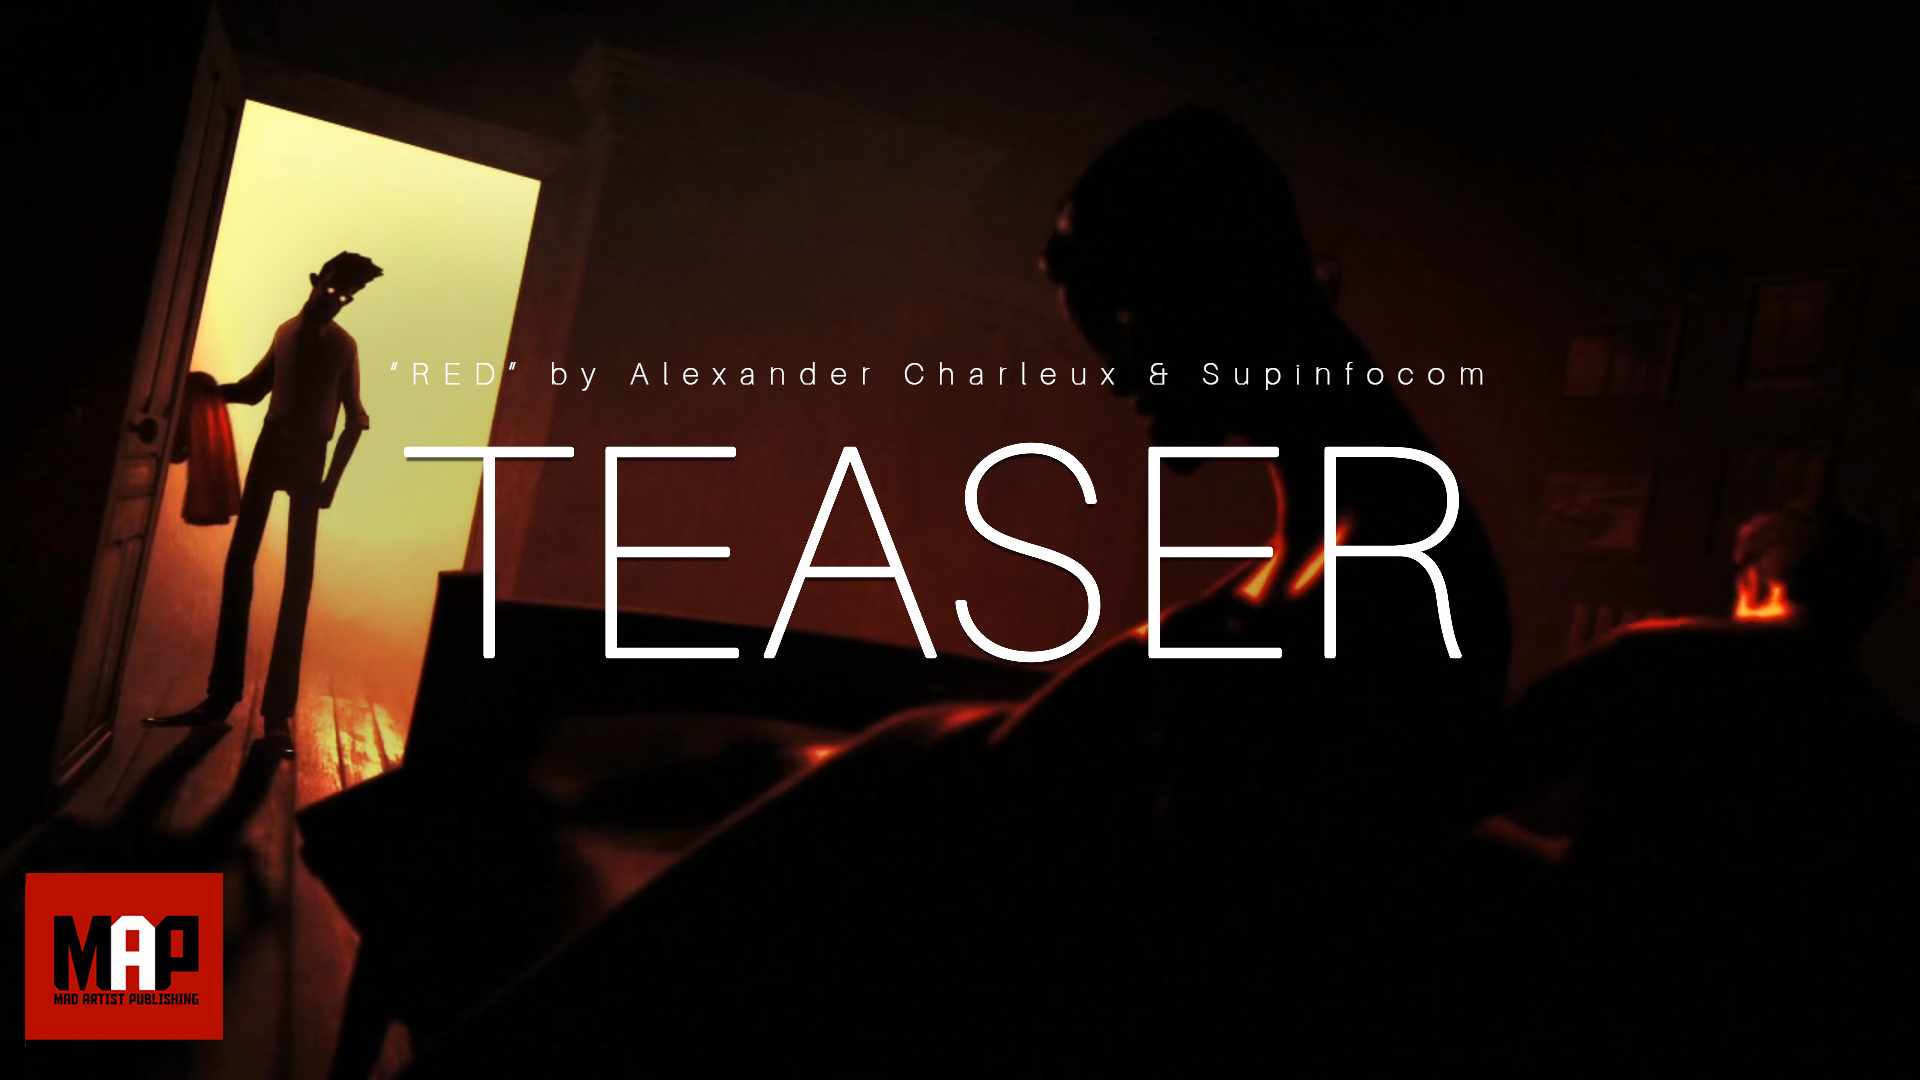 TEASER Trailer | Animated Short Film ** RED ** Suspence Thriller by Alexander Charleux & Supinfocom